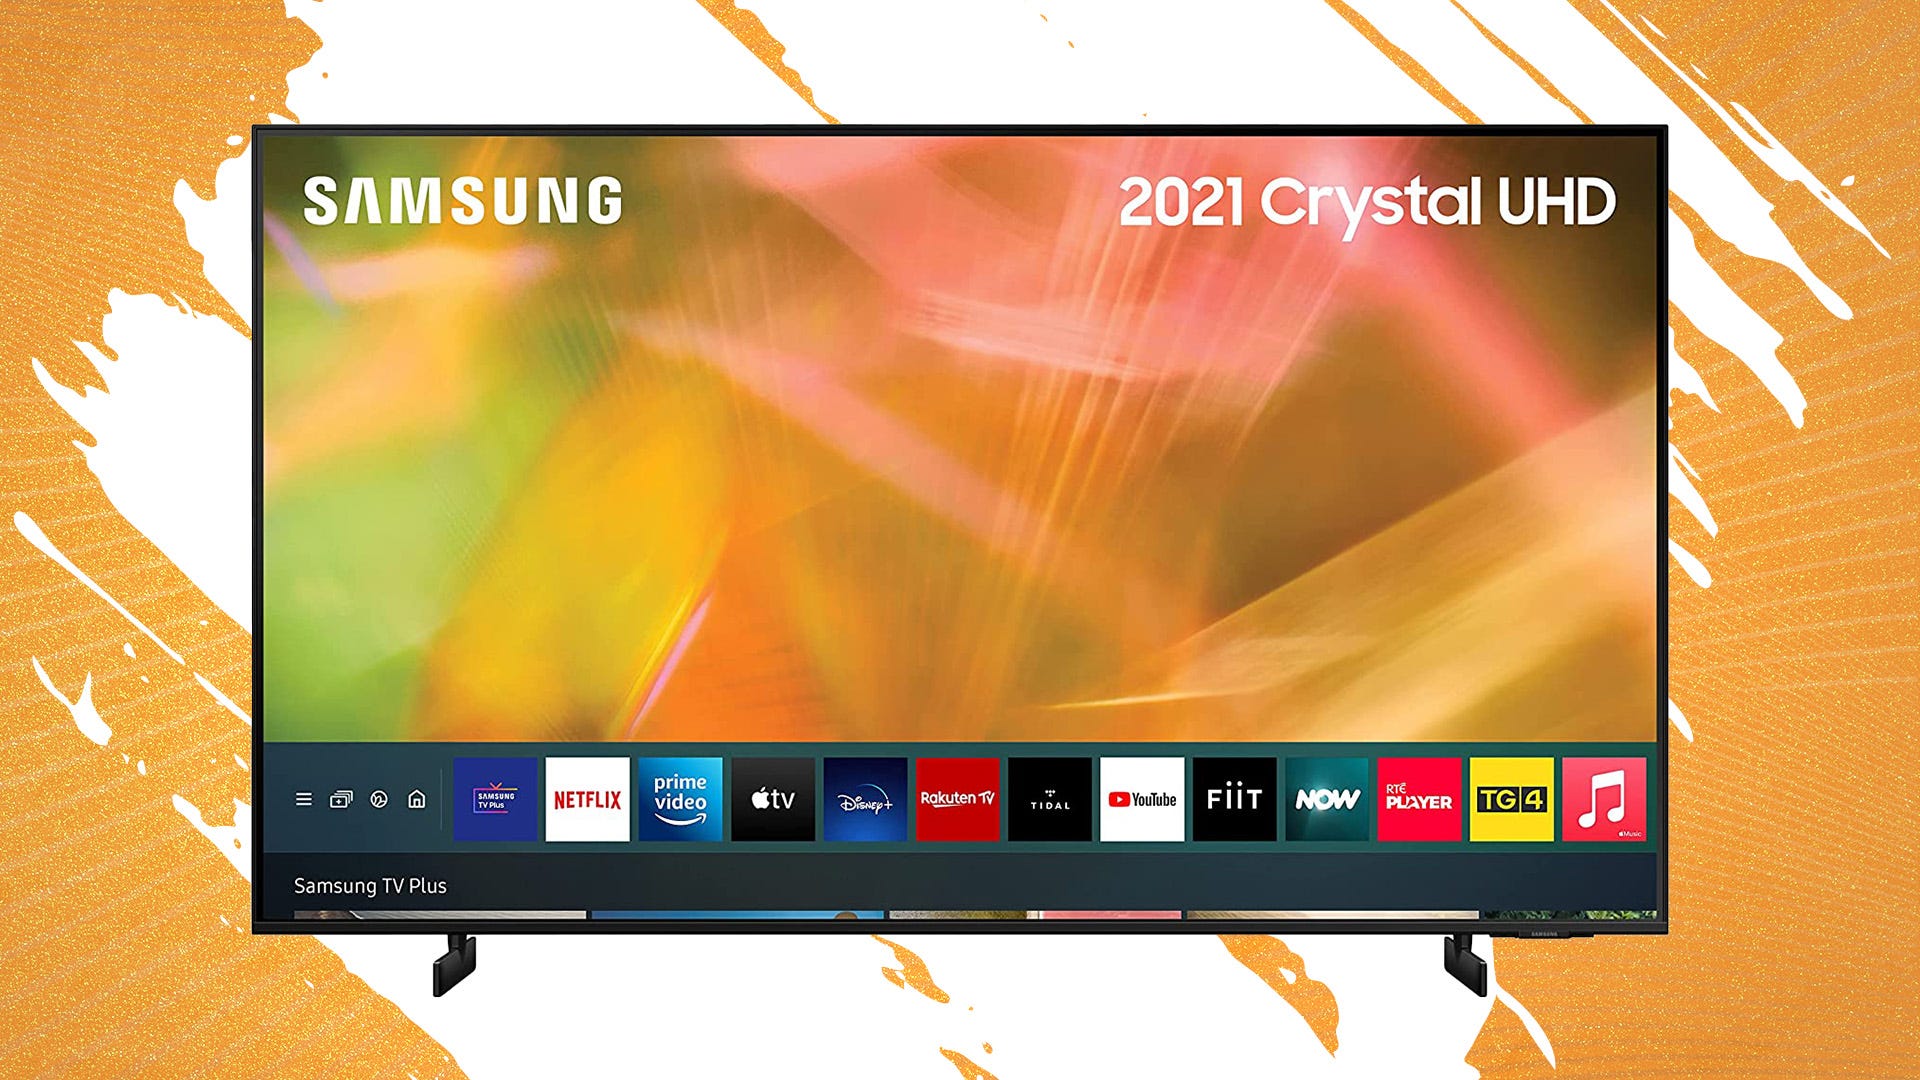 Samsung 2021 Crystal UHD